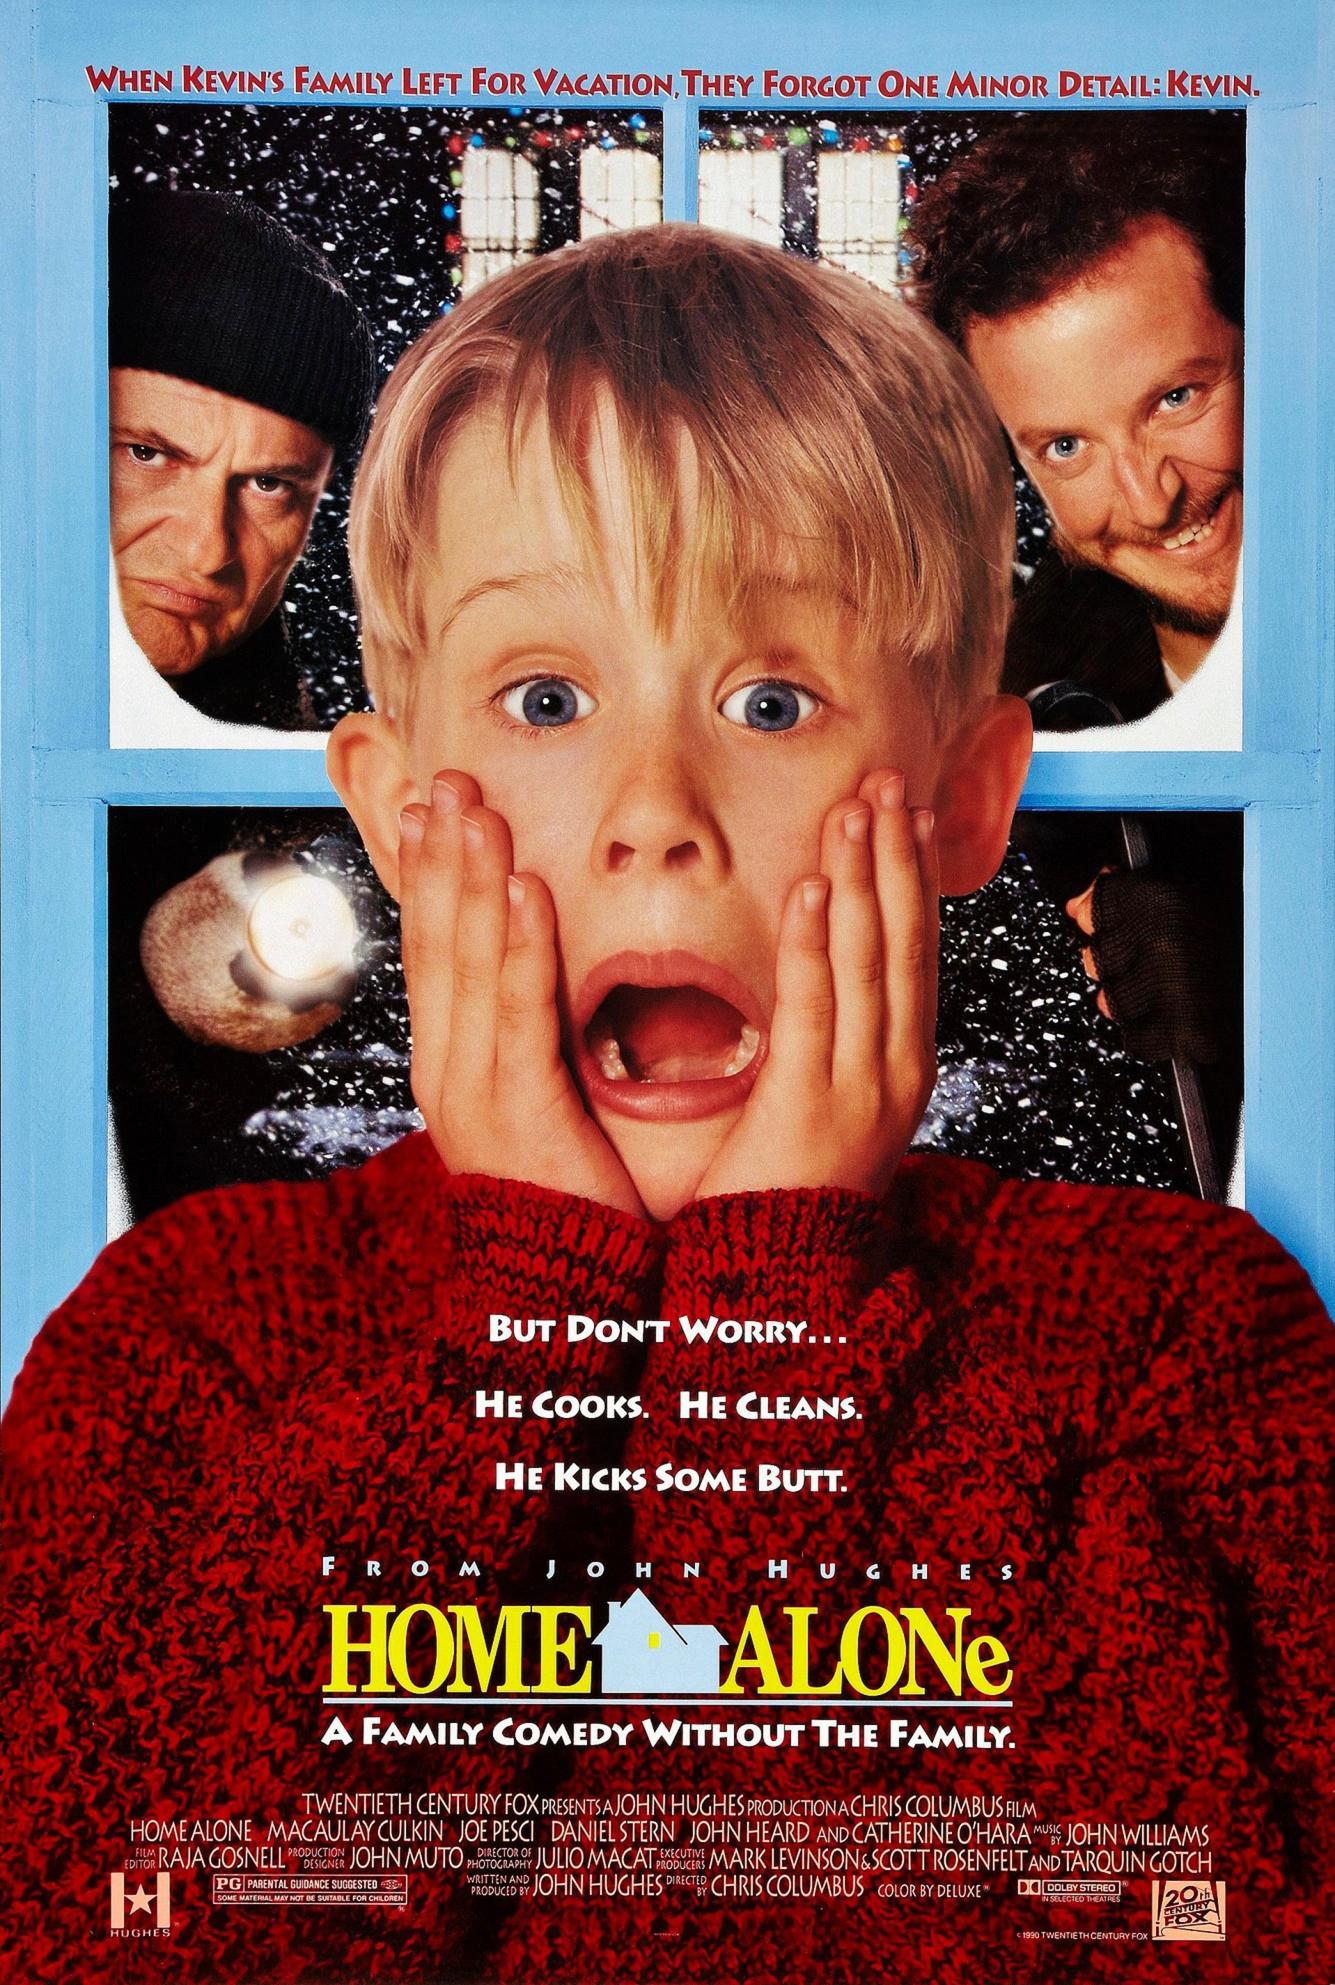 FULL MOVIE: Home Alone (1990)